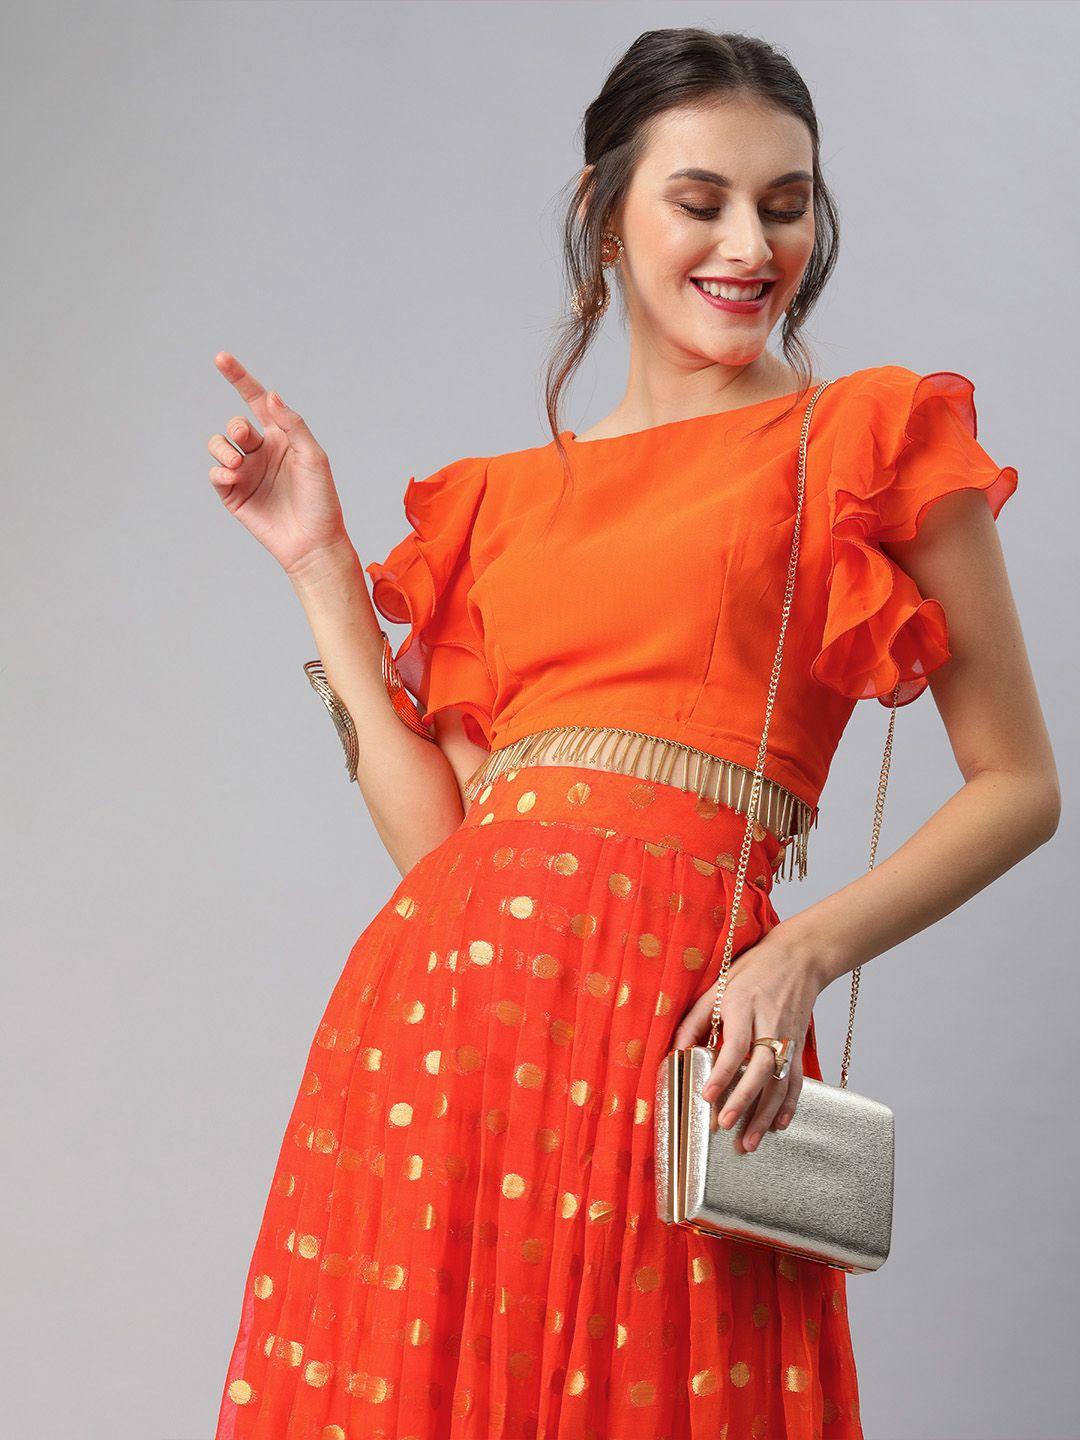 inddus women orange solid embellished detail crop top with woven design skirt